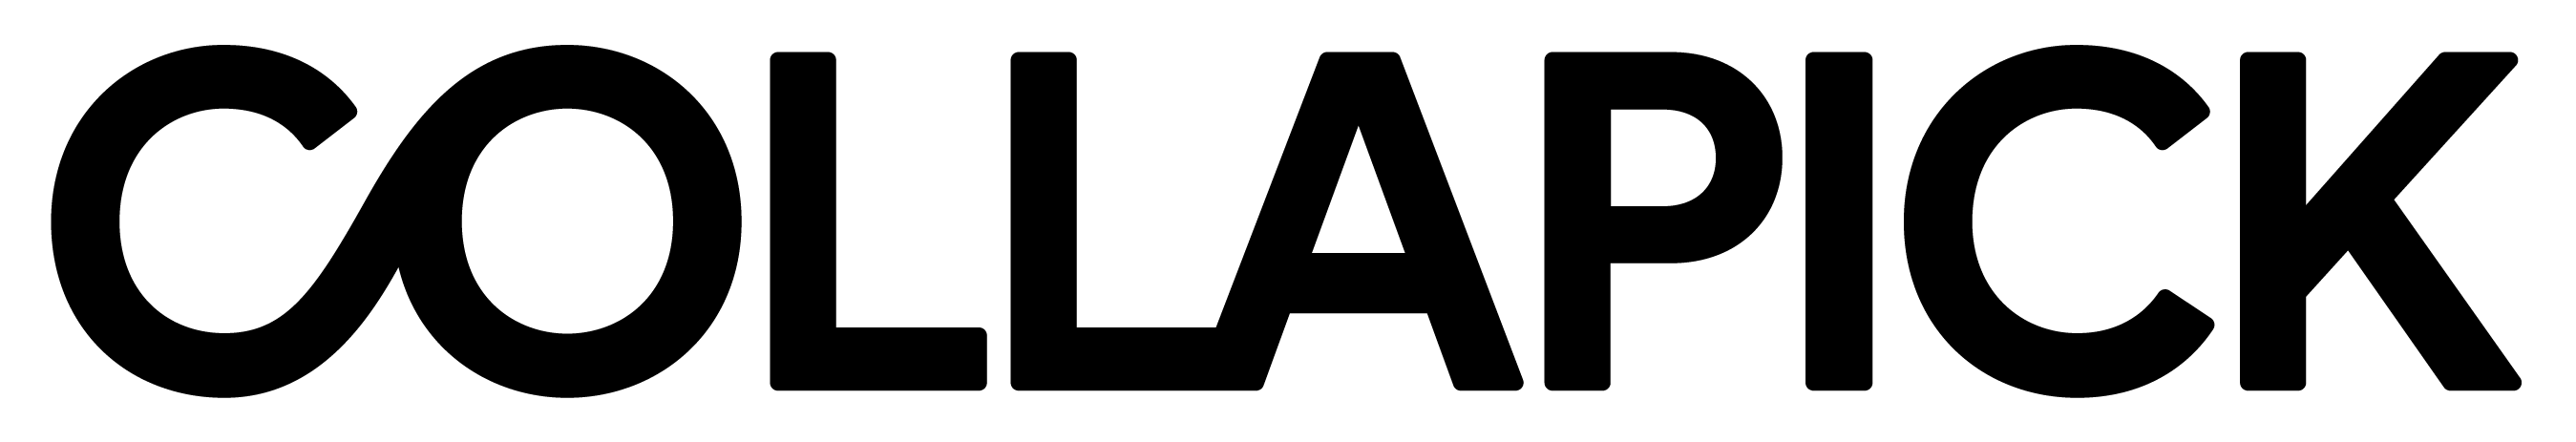 Collapick-logo